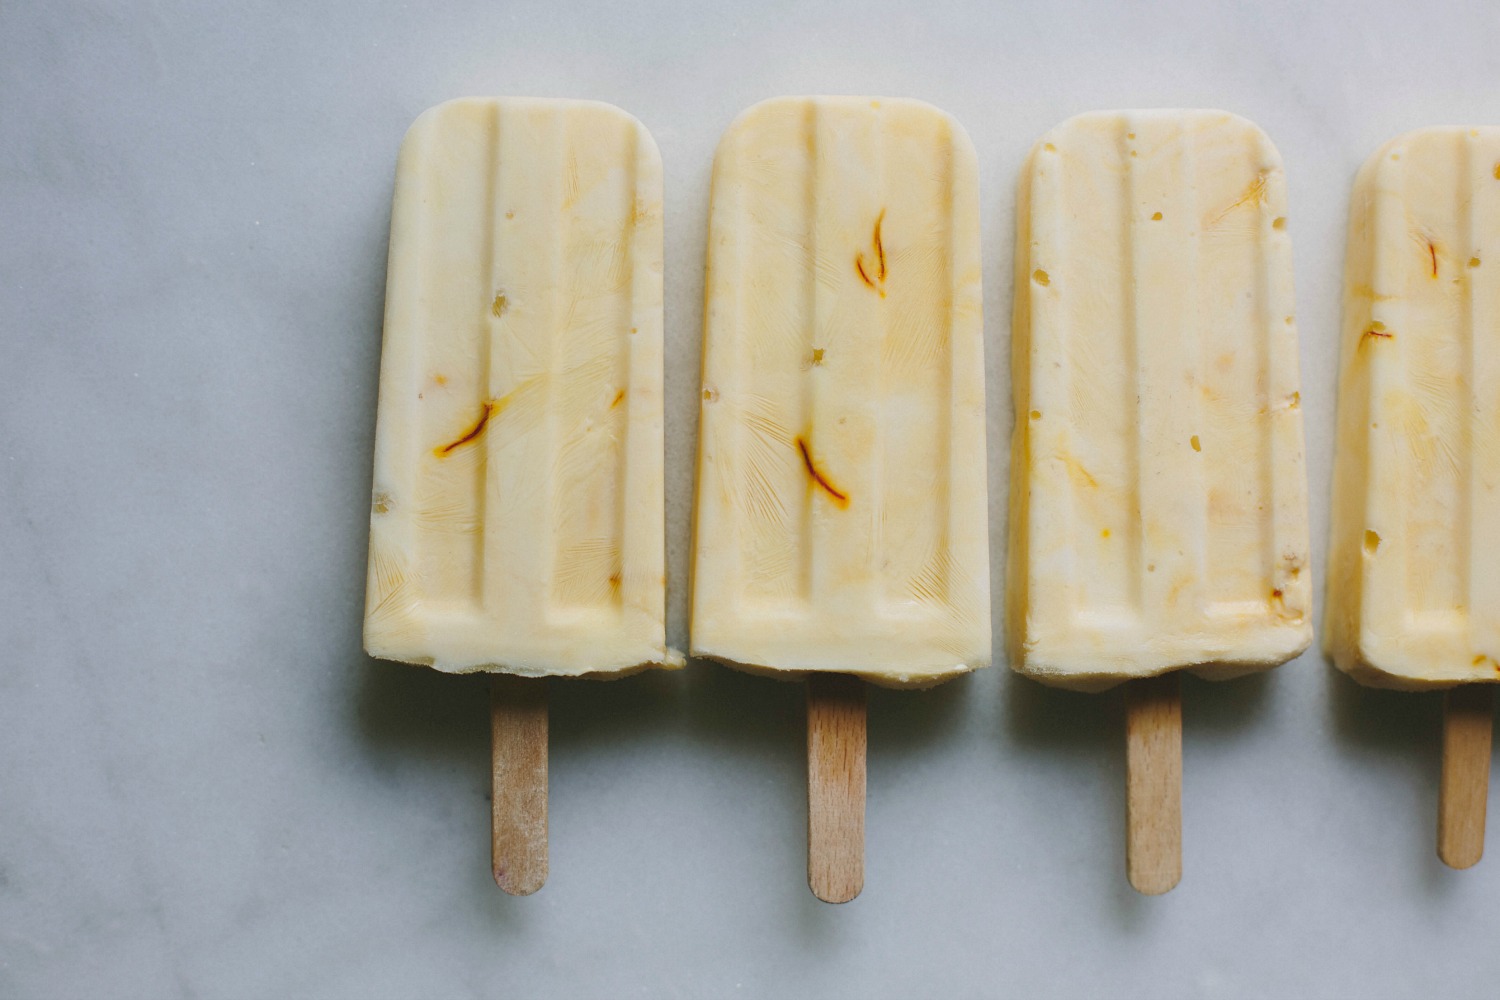 Manuka honey + saffron yoghurt pops | My Darling Lemon Thyme